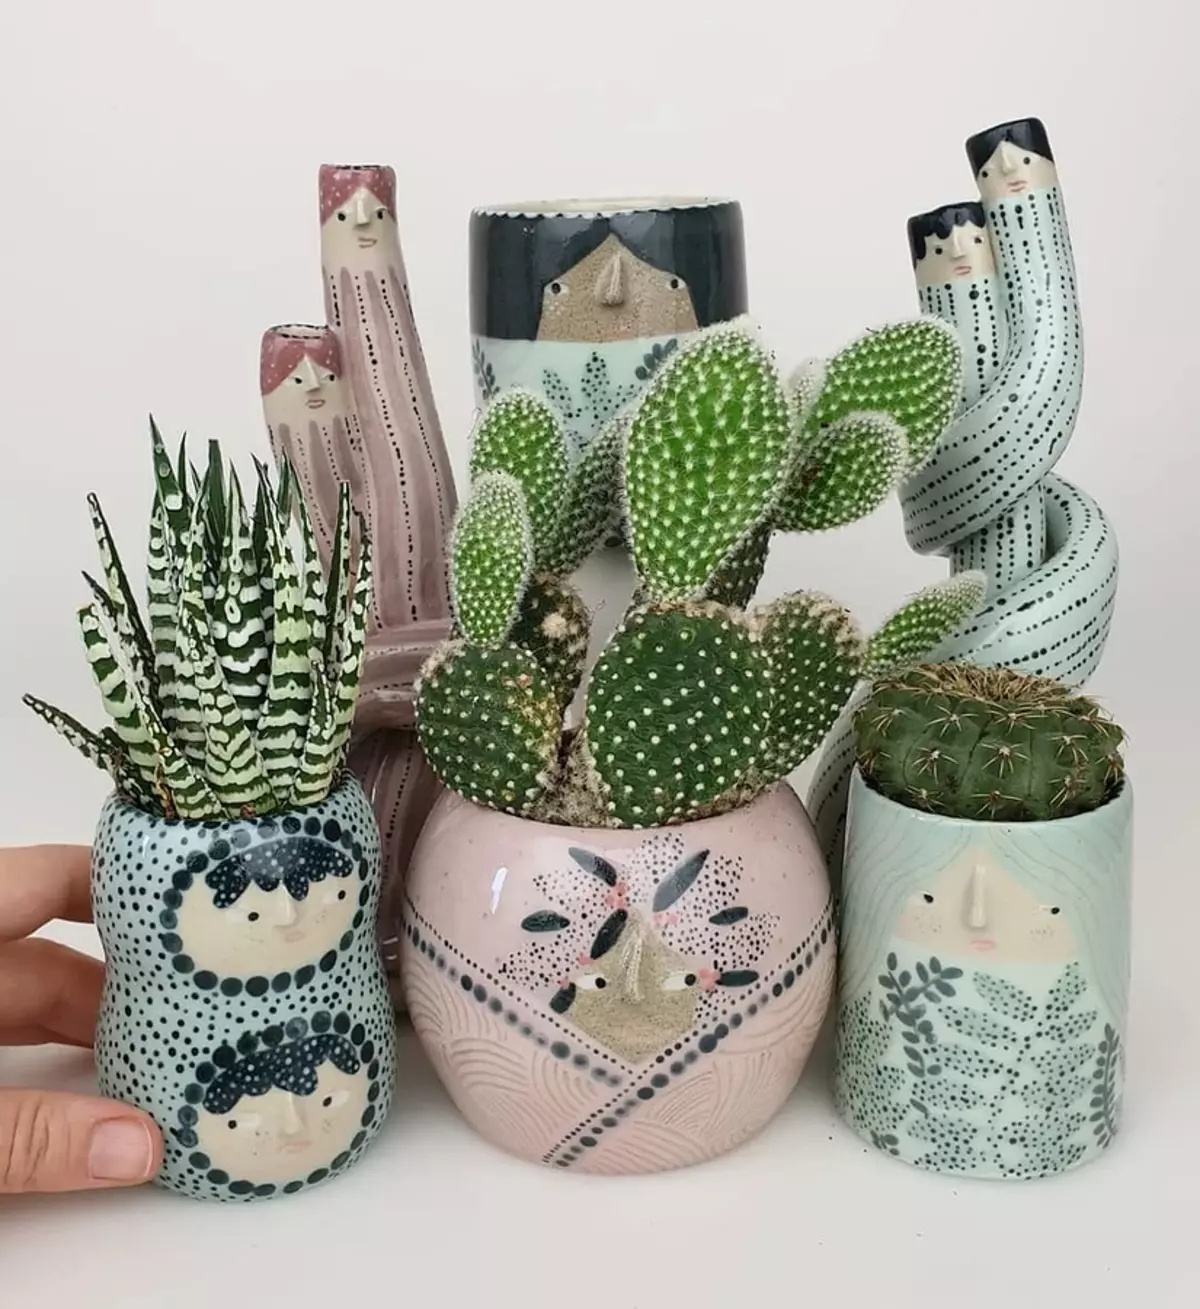 Ceramics with character: needlework instagram week